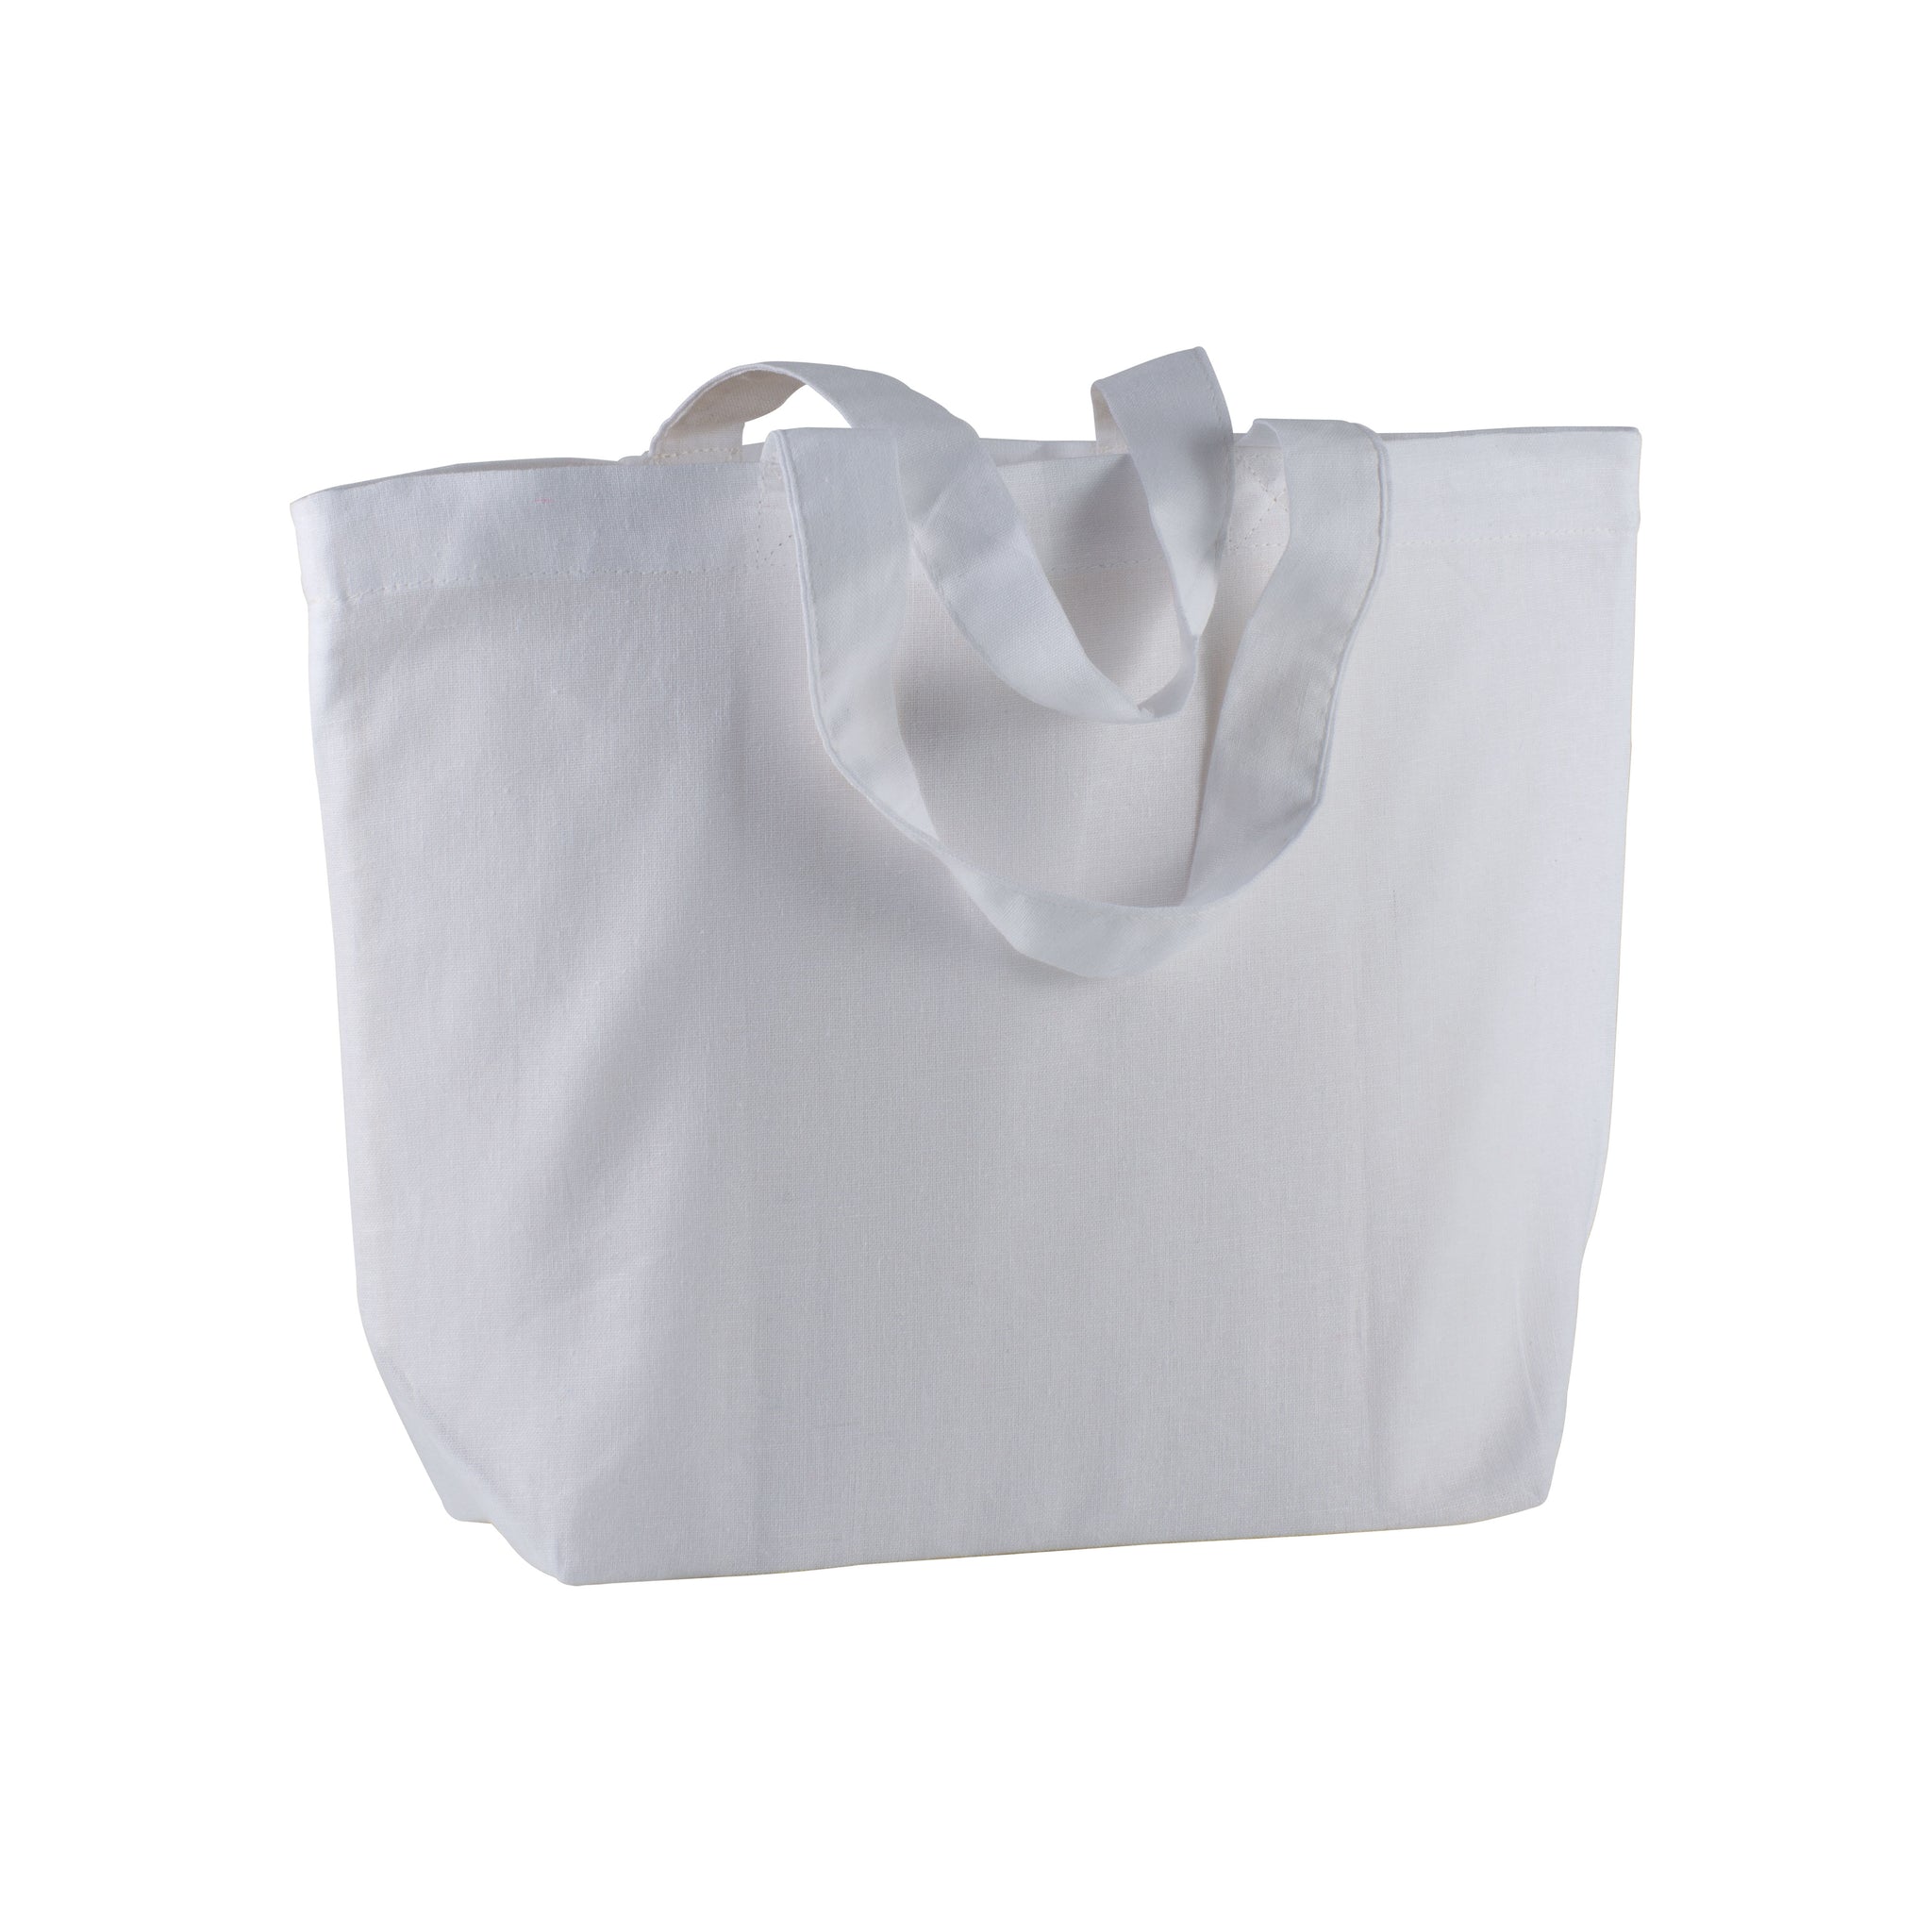 borsa promozionale in cotone bianca 01307819 VAR05